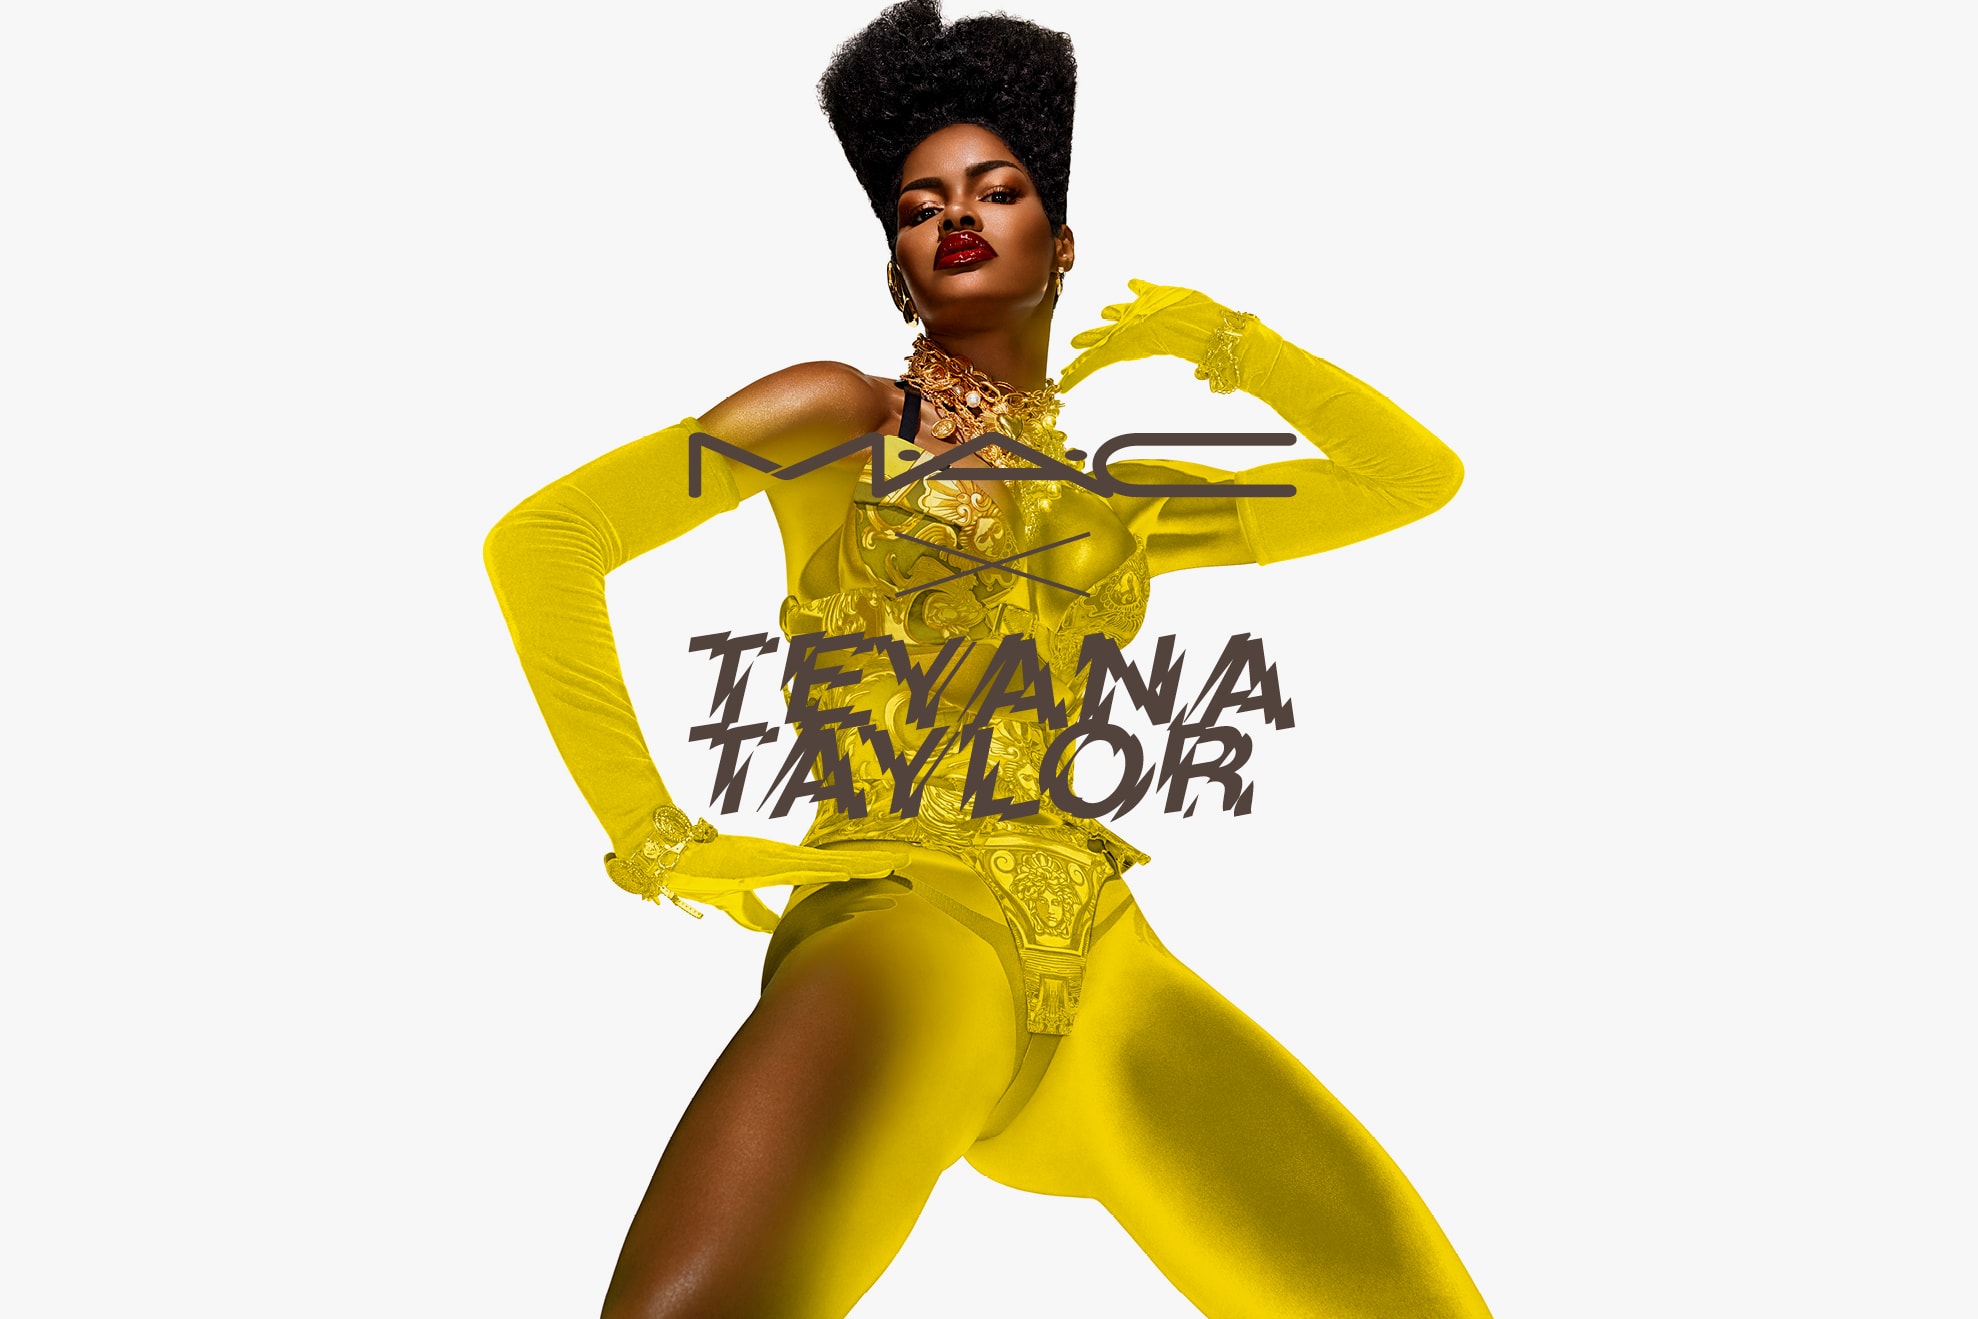 K E I S H on X: THE Teyana Taylor. I love this take on classic